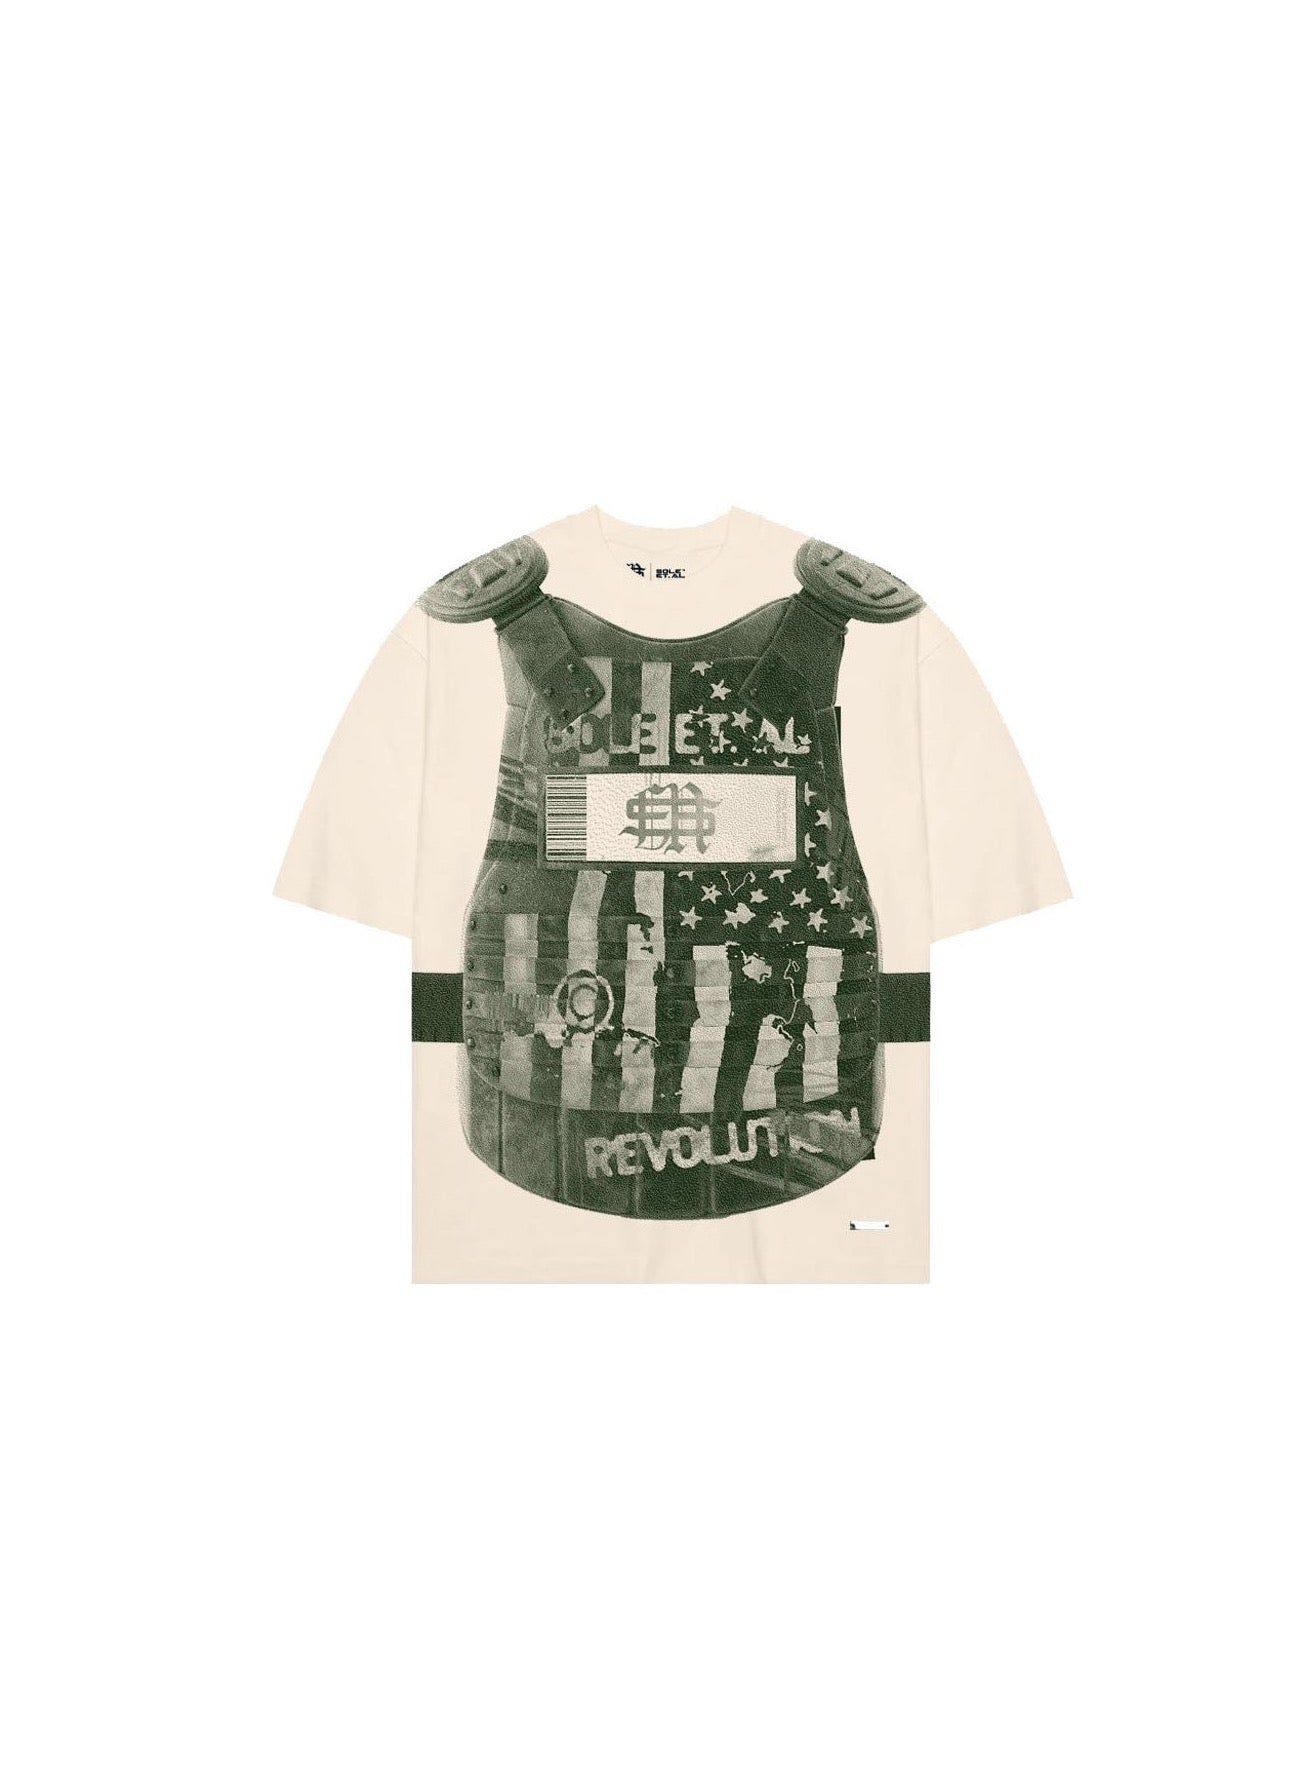 Enig et. Al United Revolutionair T-shirt : Zand / Militair groen